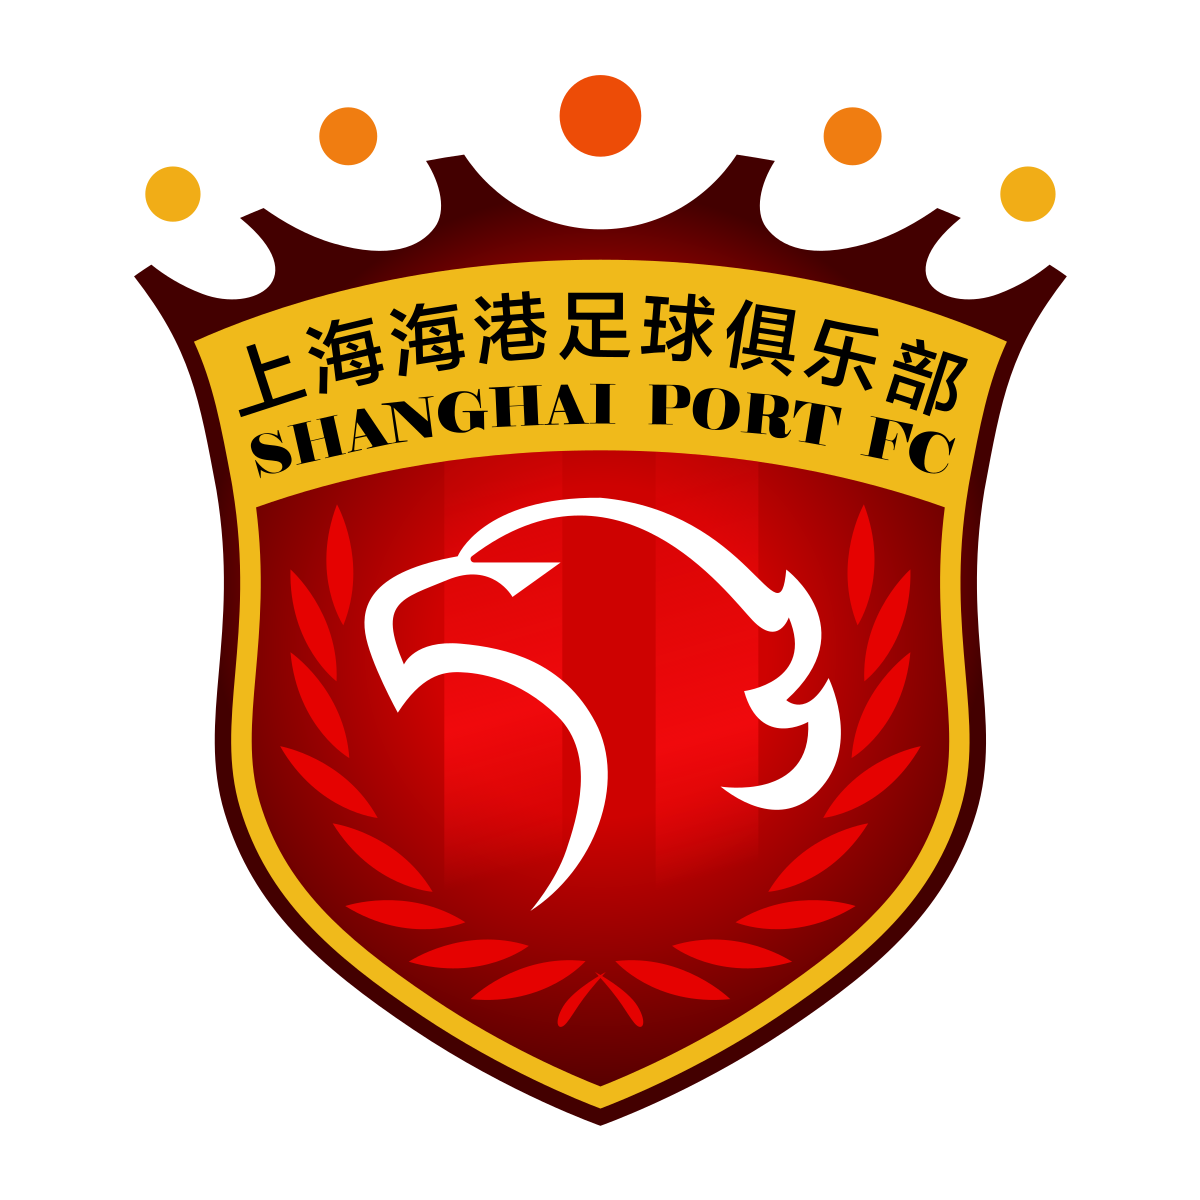 Shanghai Port F.C. - Wikipedia